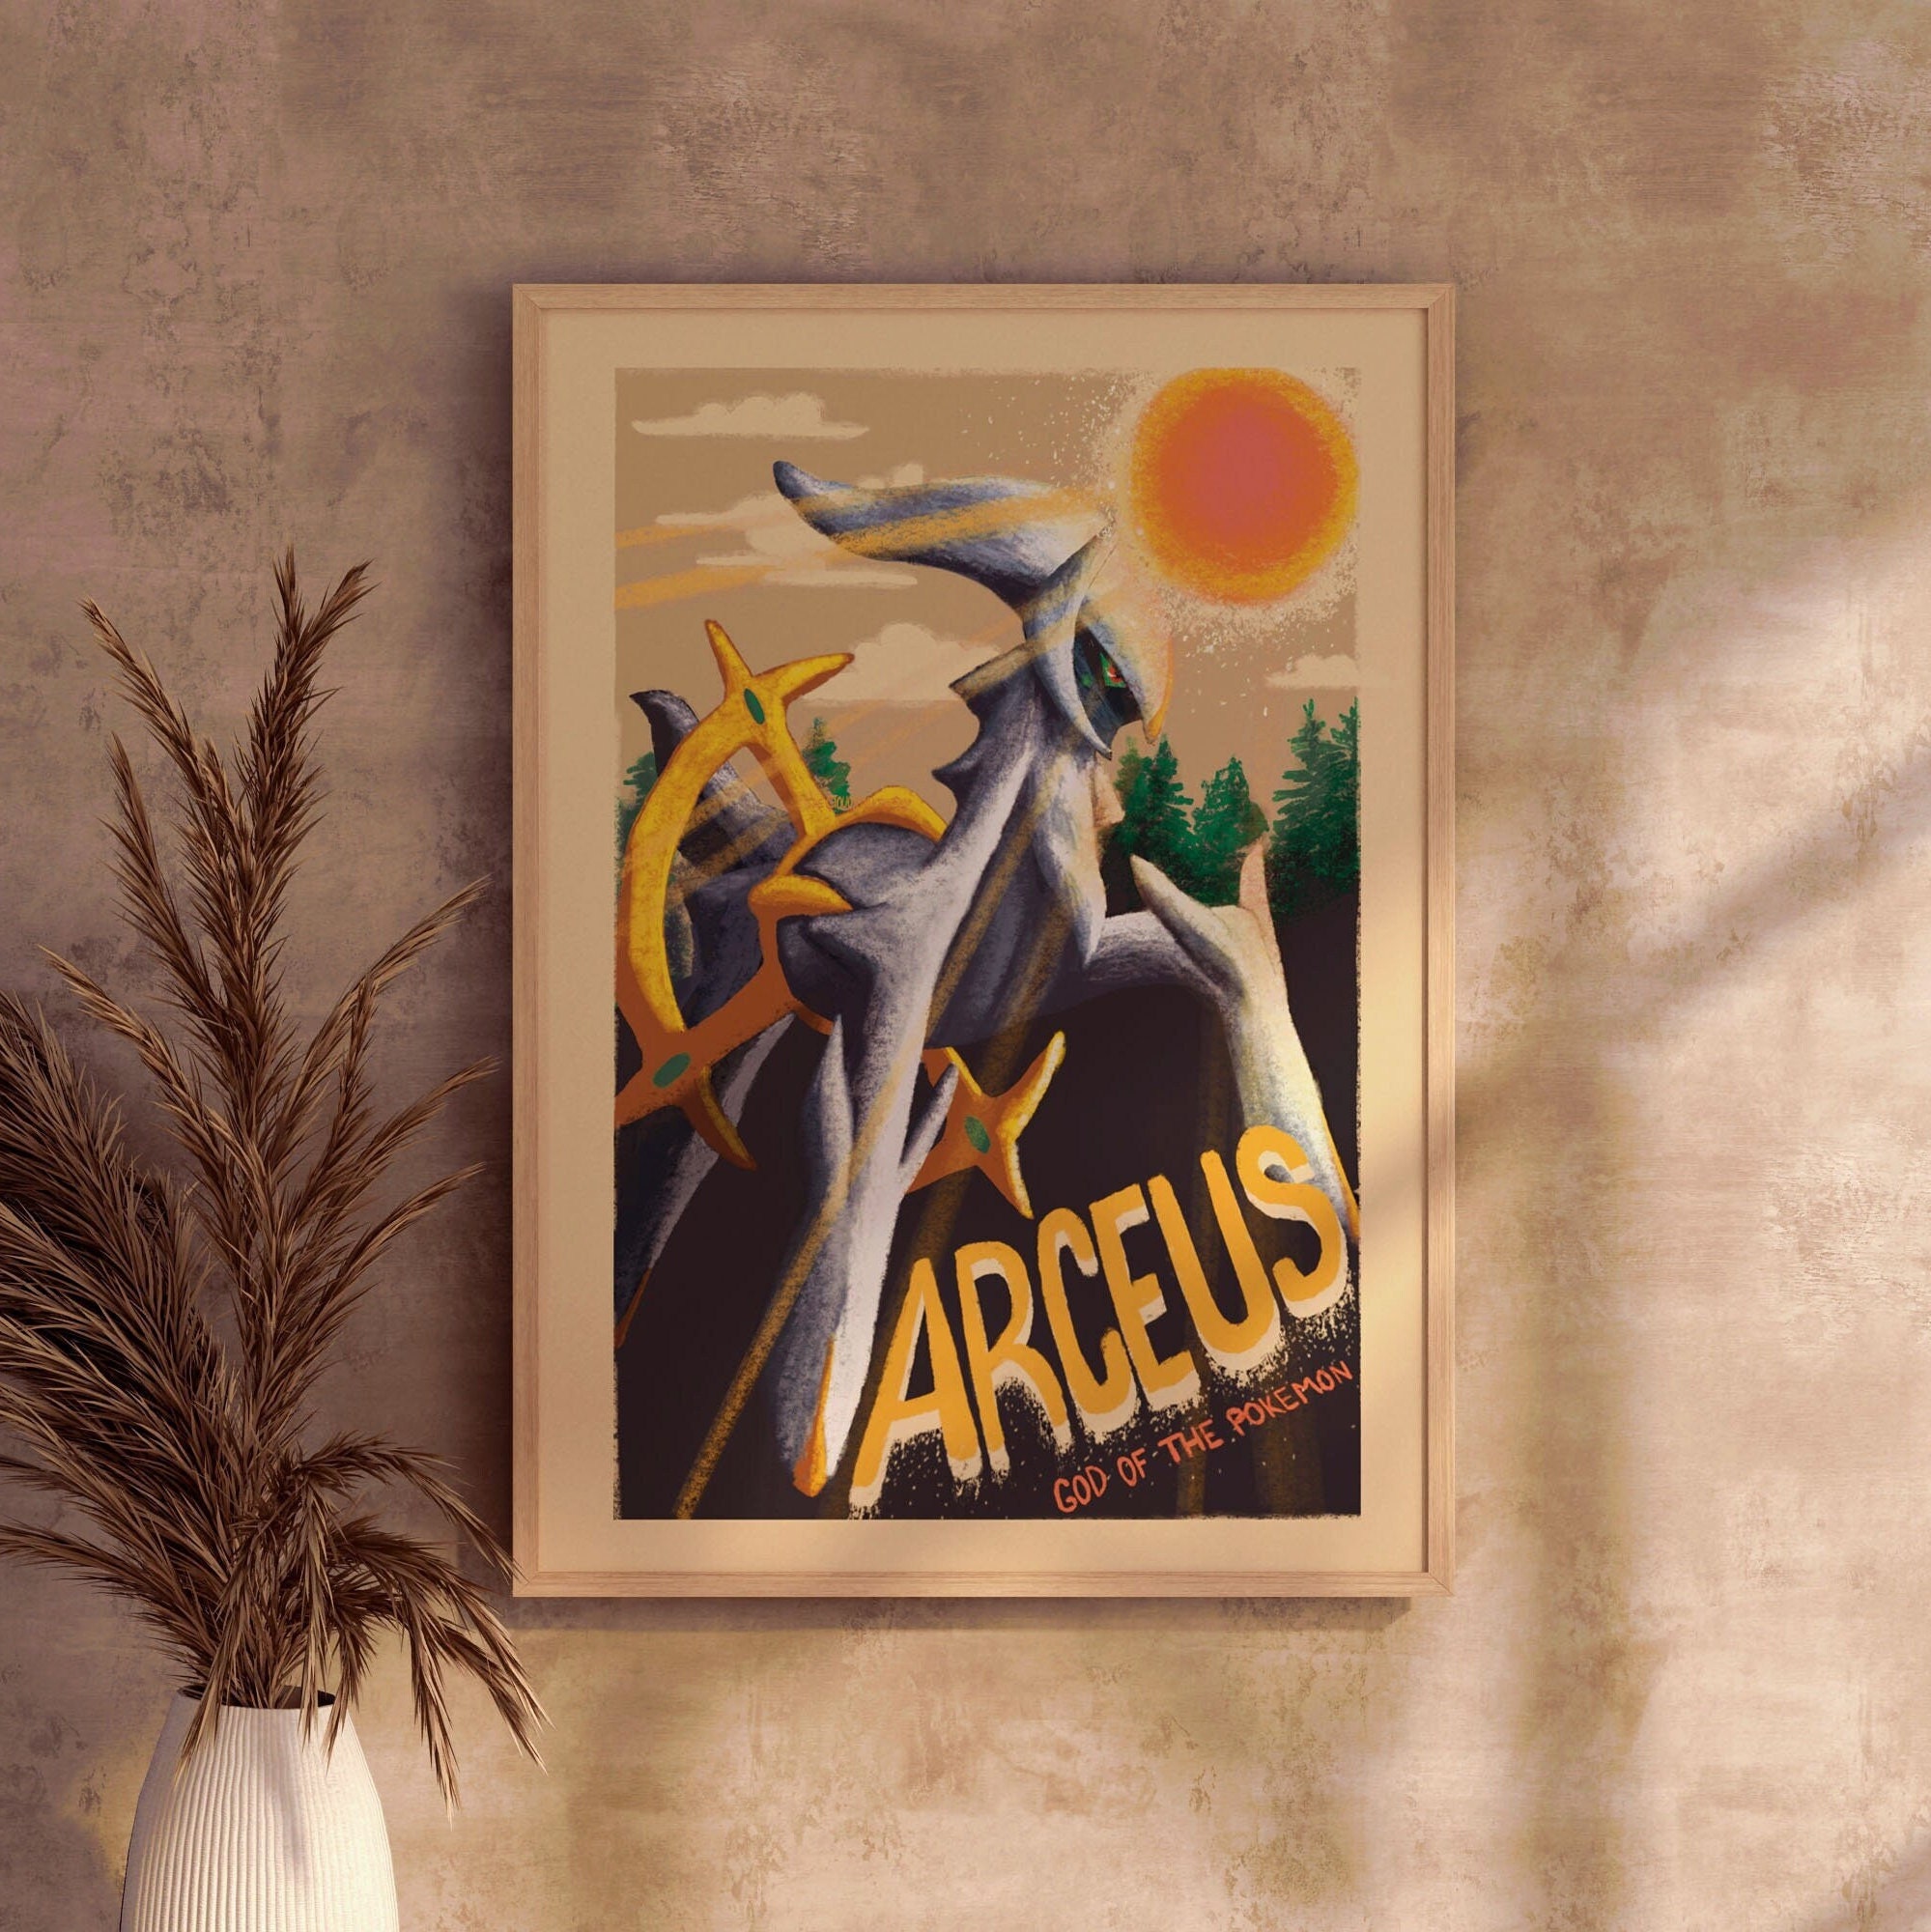 Pokemon TCG Platinum Arceus Print Ad Card Game Poster Art PROMO Original  Alpha